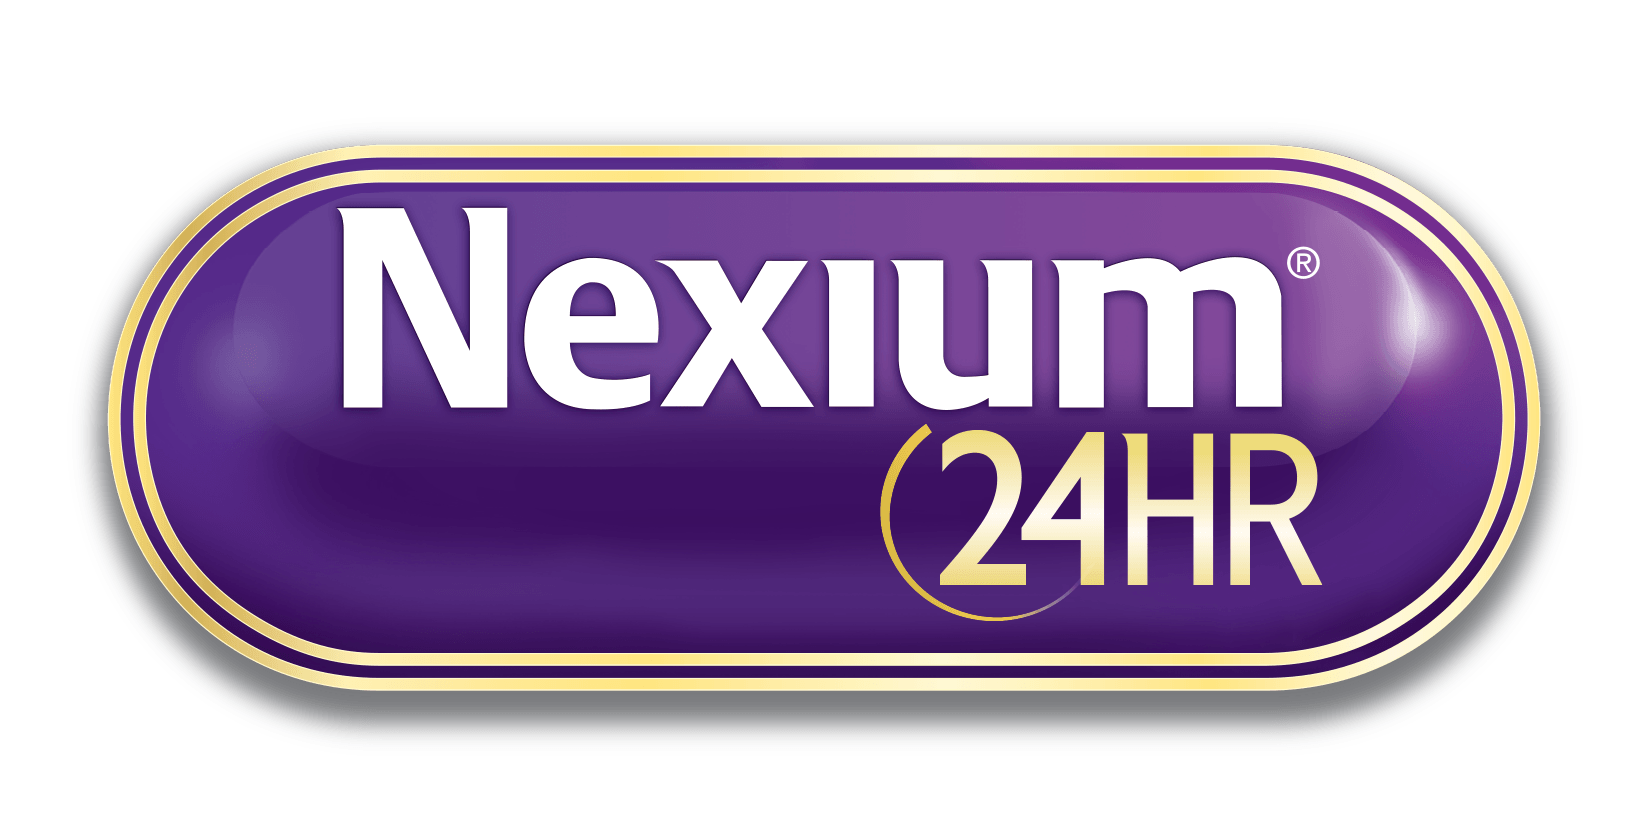 Nexium Logo - Nexium Logo by Love DuBuque. Emails. Logos, Vector online, Heartburn